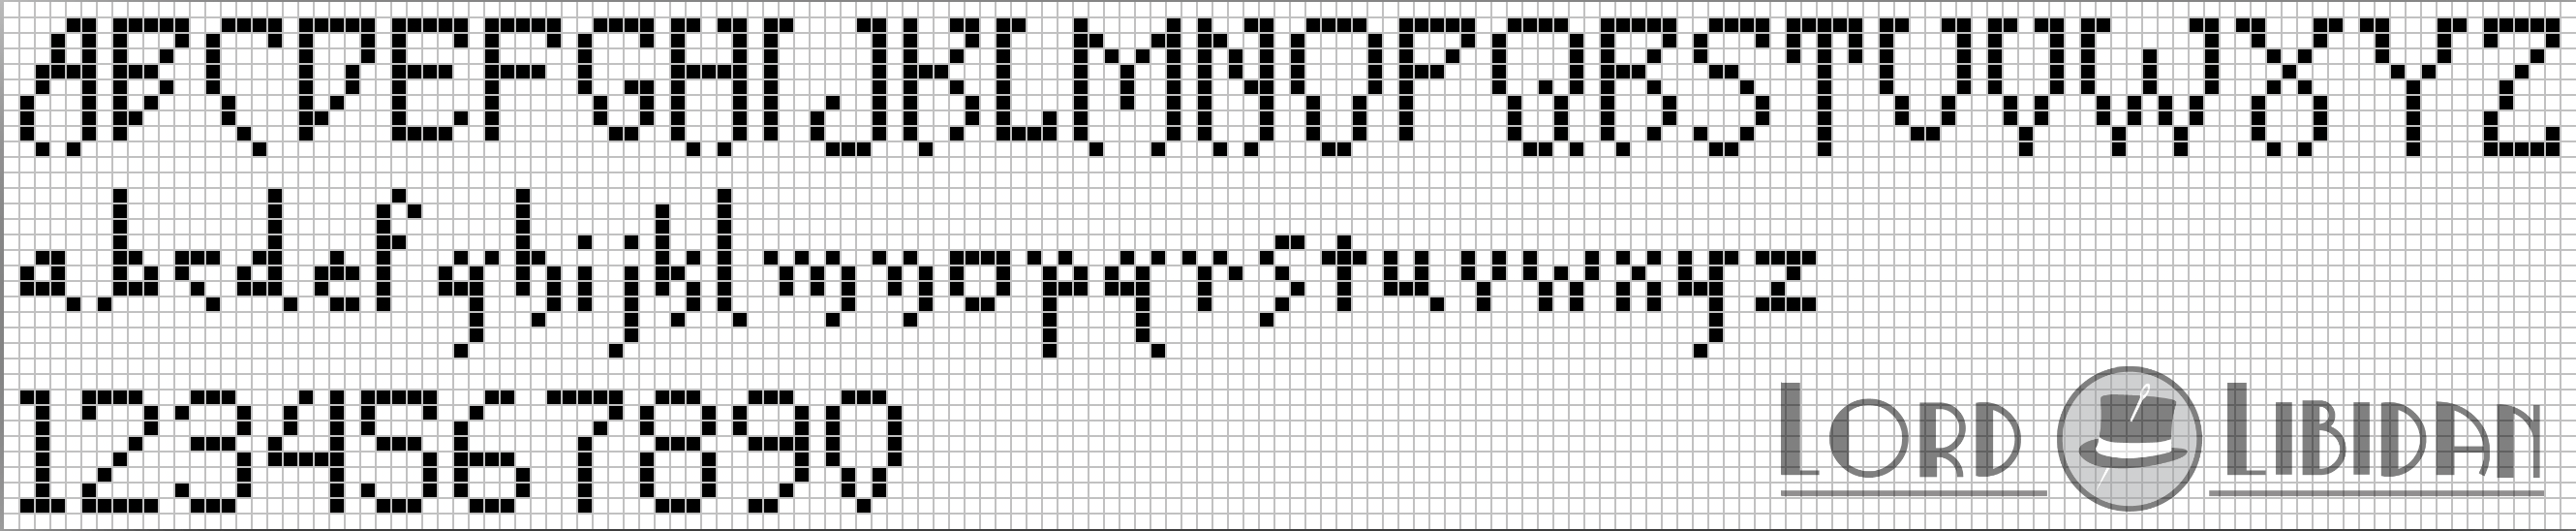 Horror Cross Stitch Alphabet Pattern Free Download by Lord Libidan